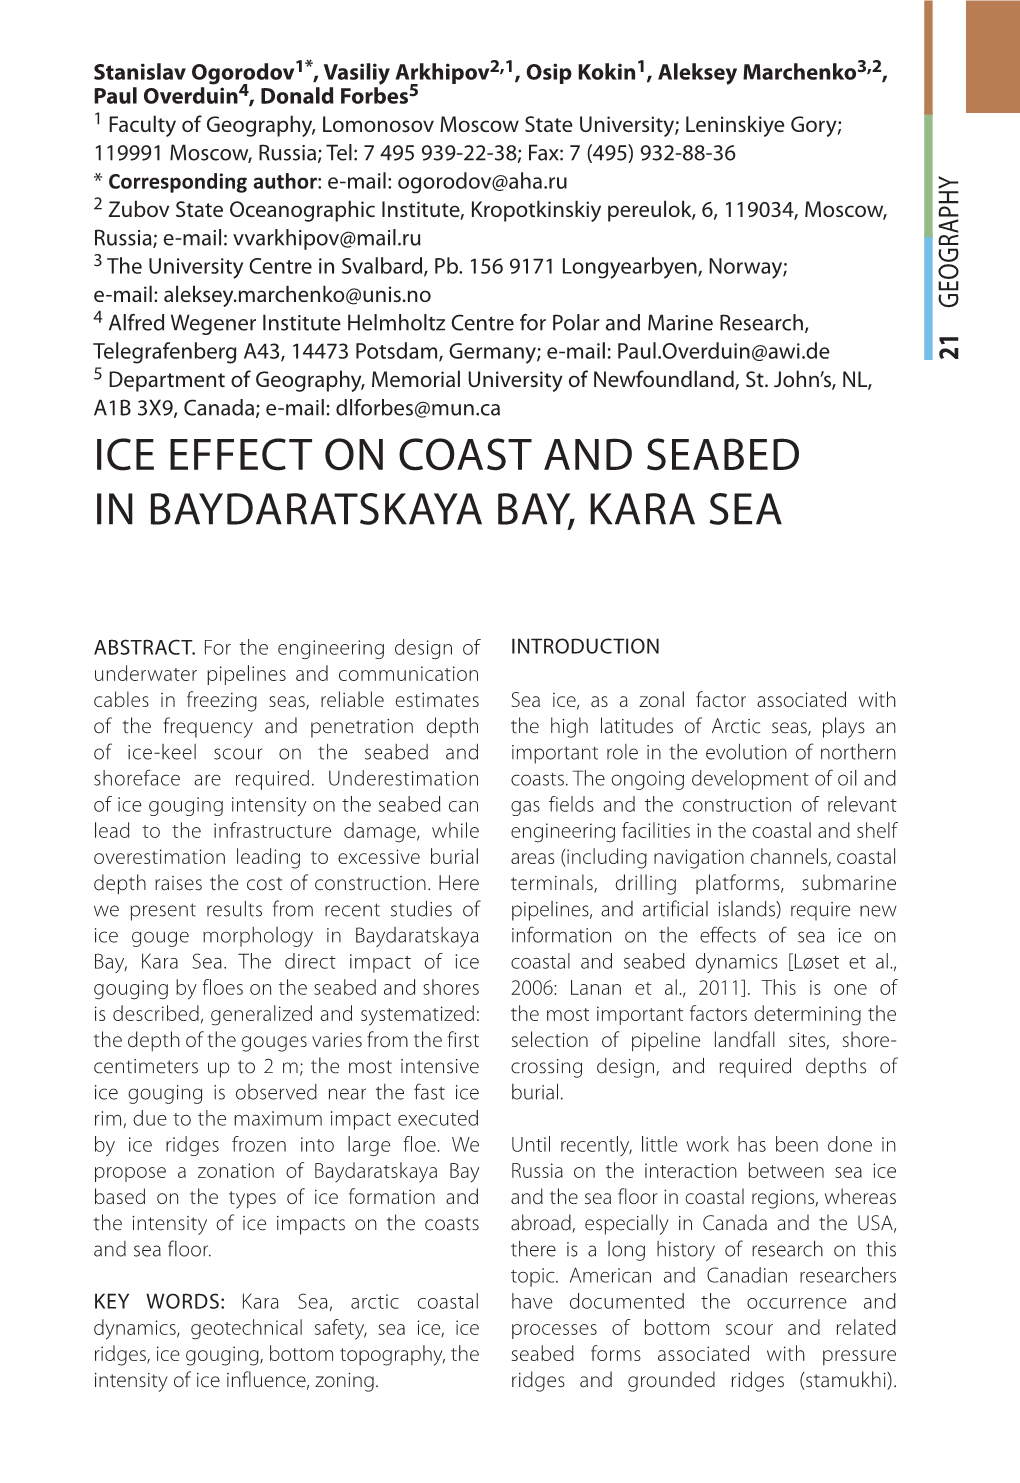 Ice Effect on Coast and Seabed in Baydaratskaya